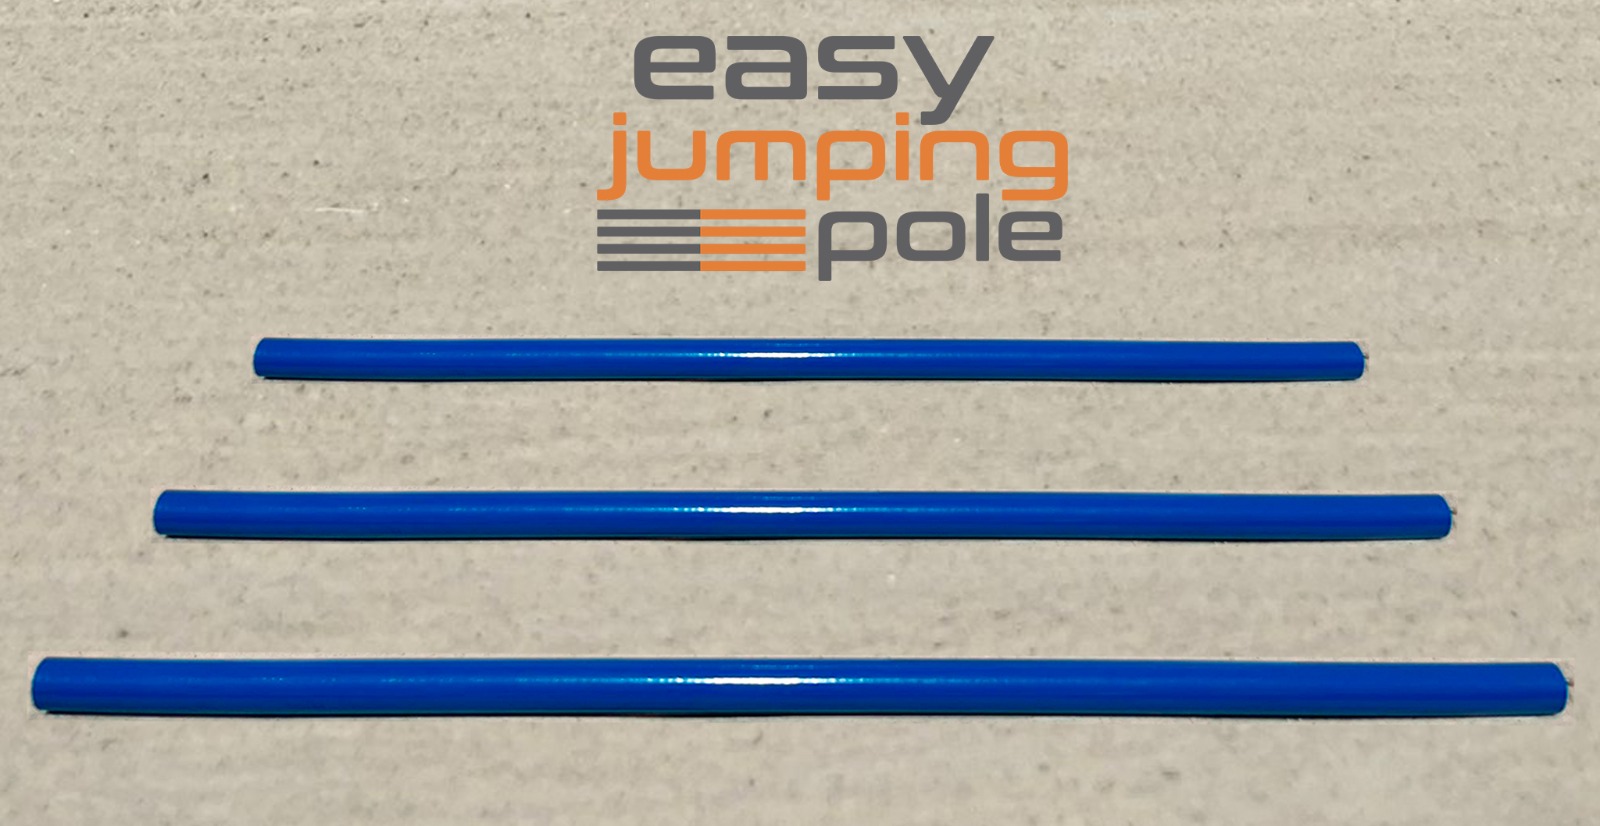 Easy jumping pole Model SC-9